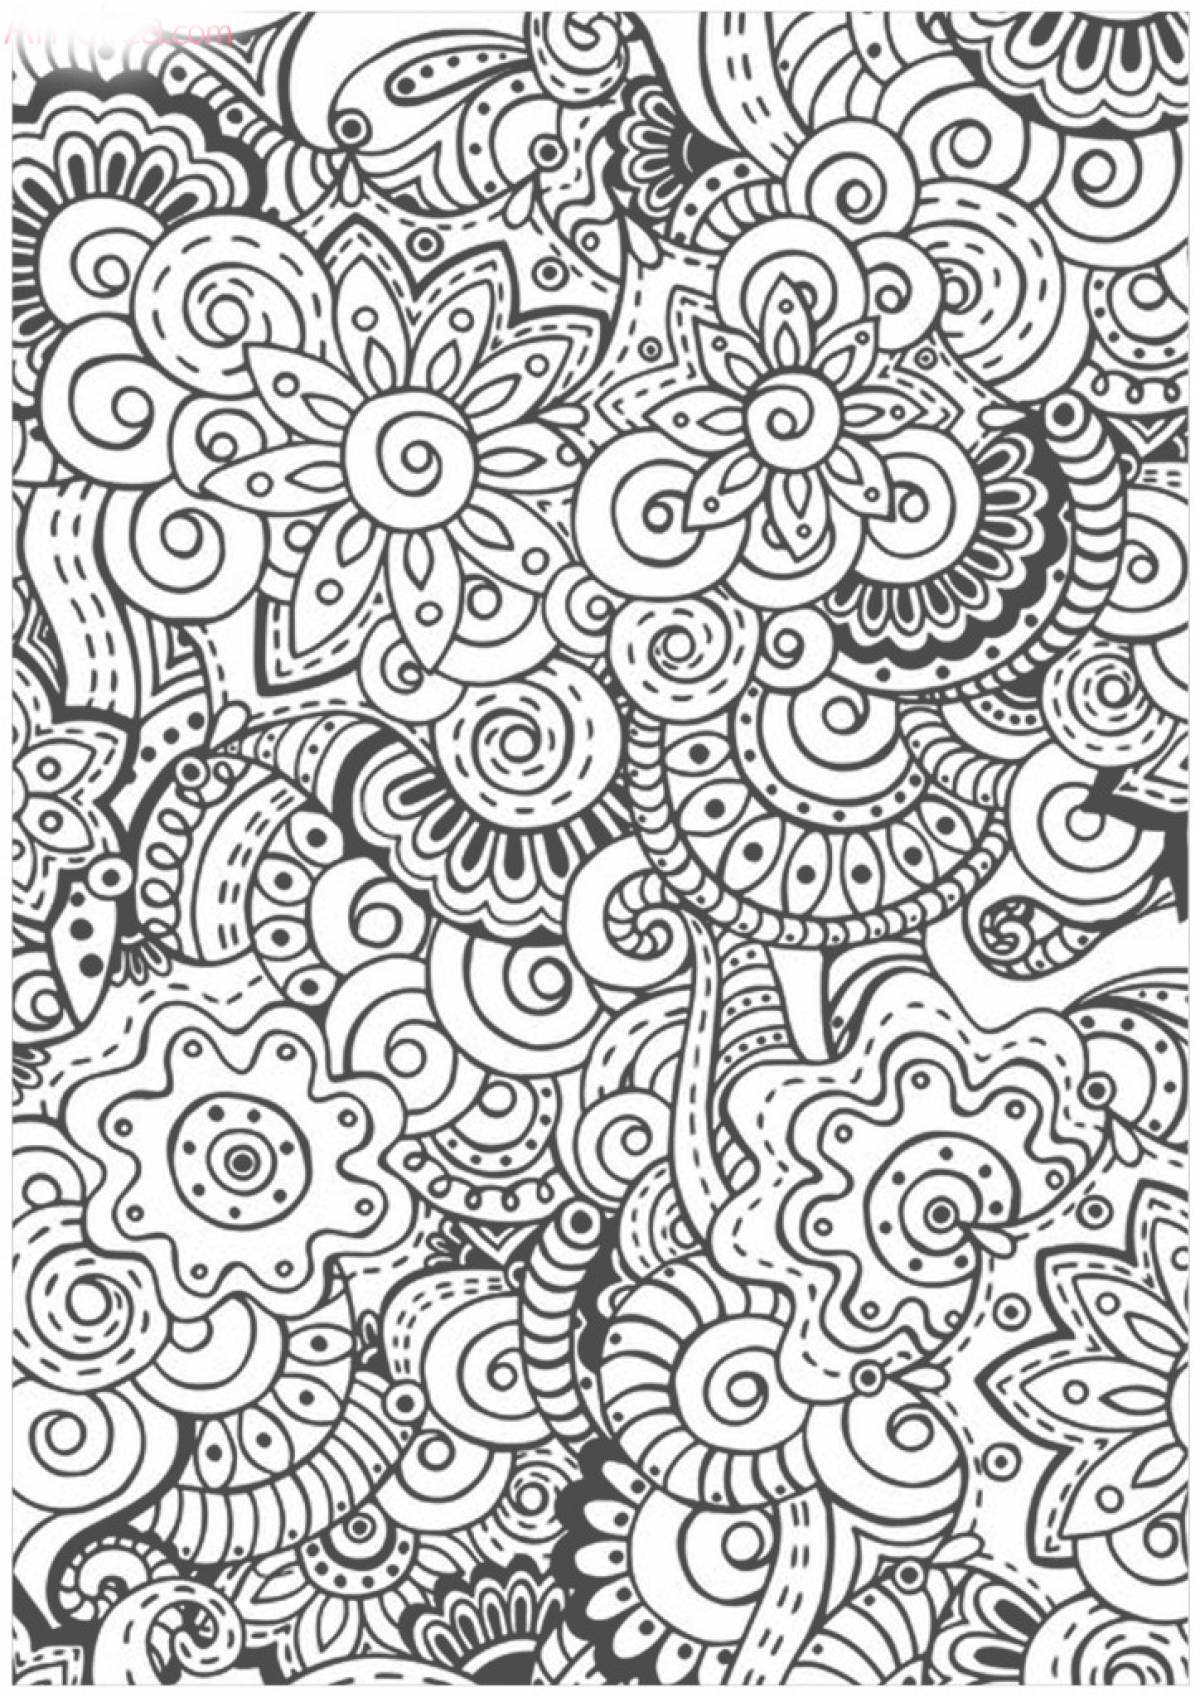 Drawing pattern